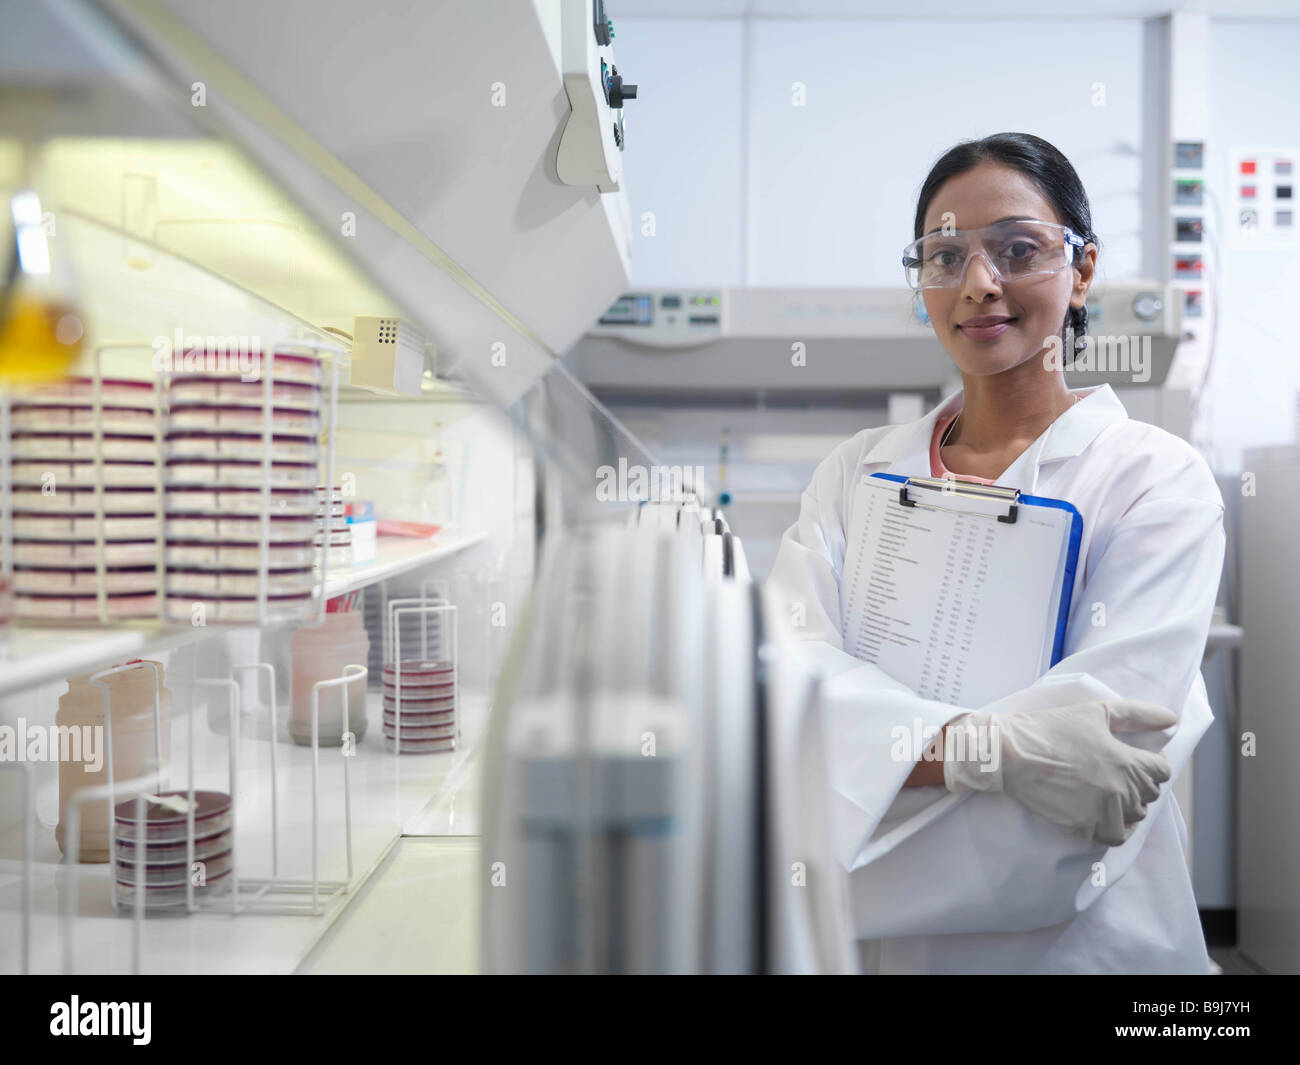 Laboratory technician with clipboard Stock Photo